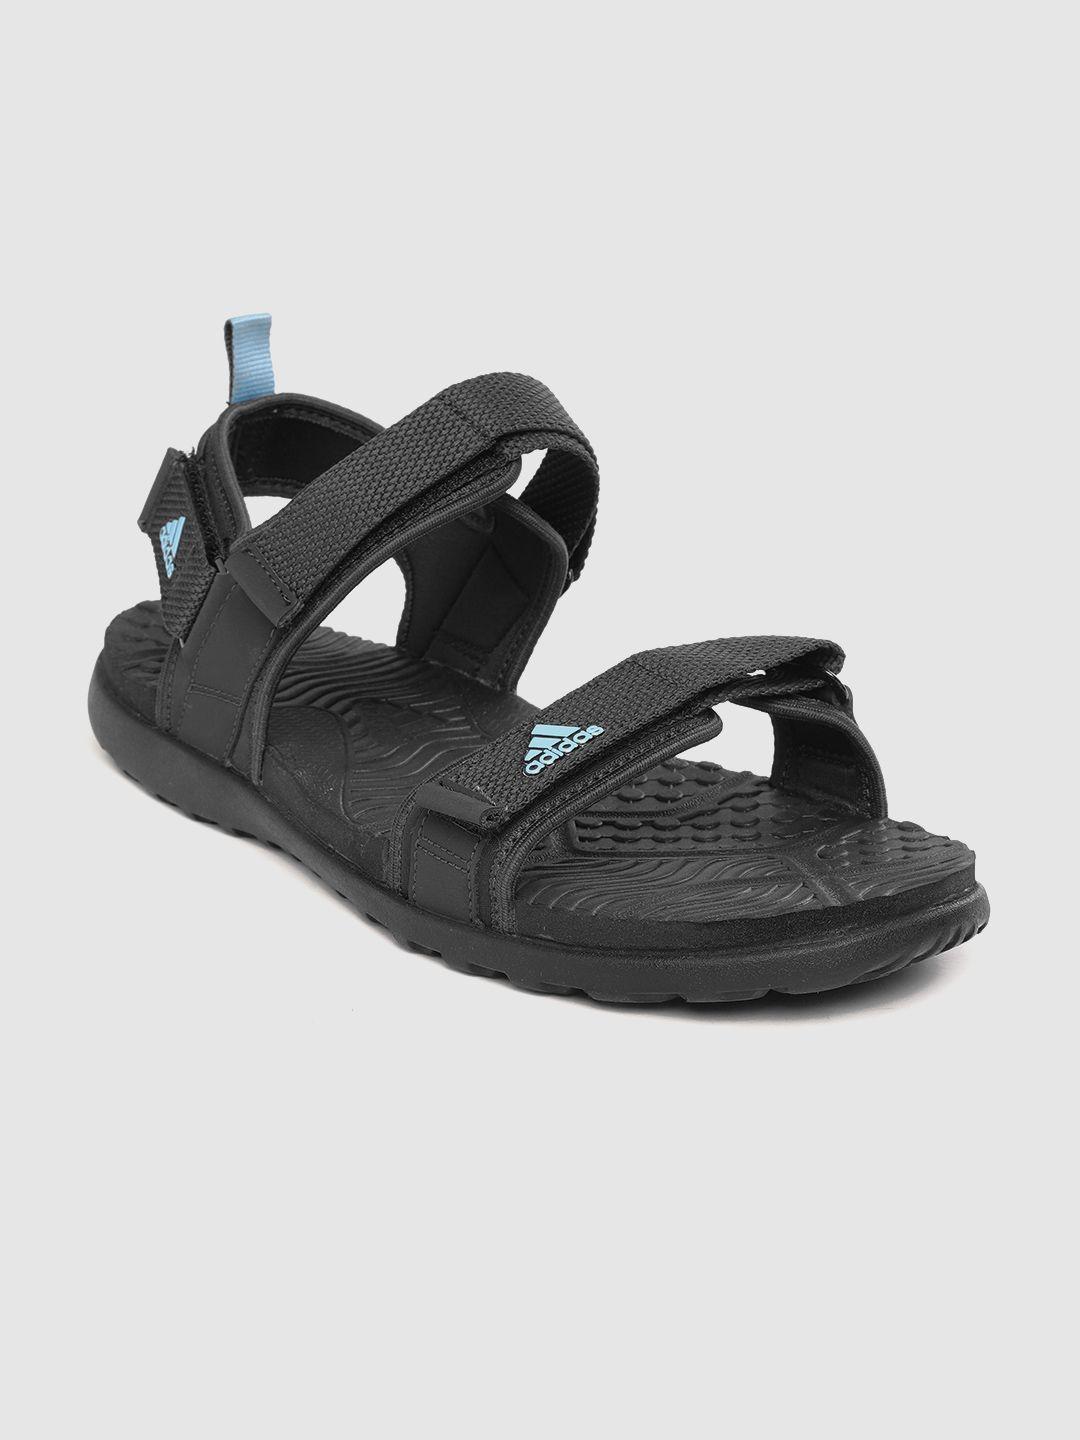 adidas men charcoal grey adipu 2019 sports sandals